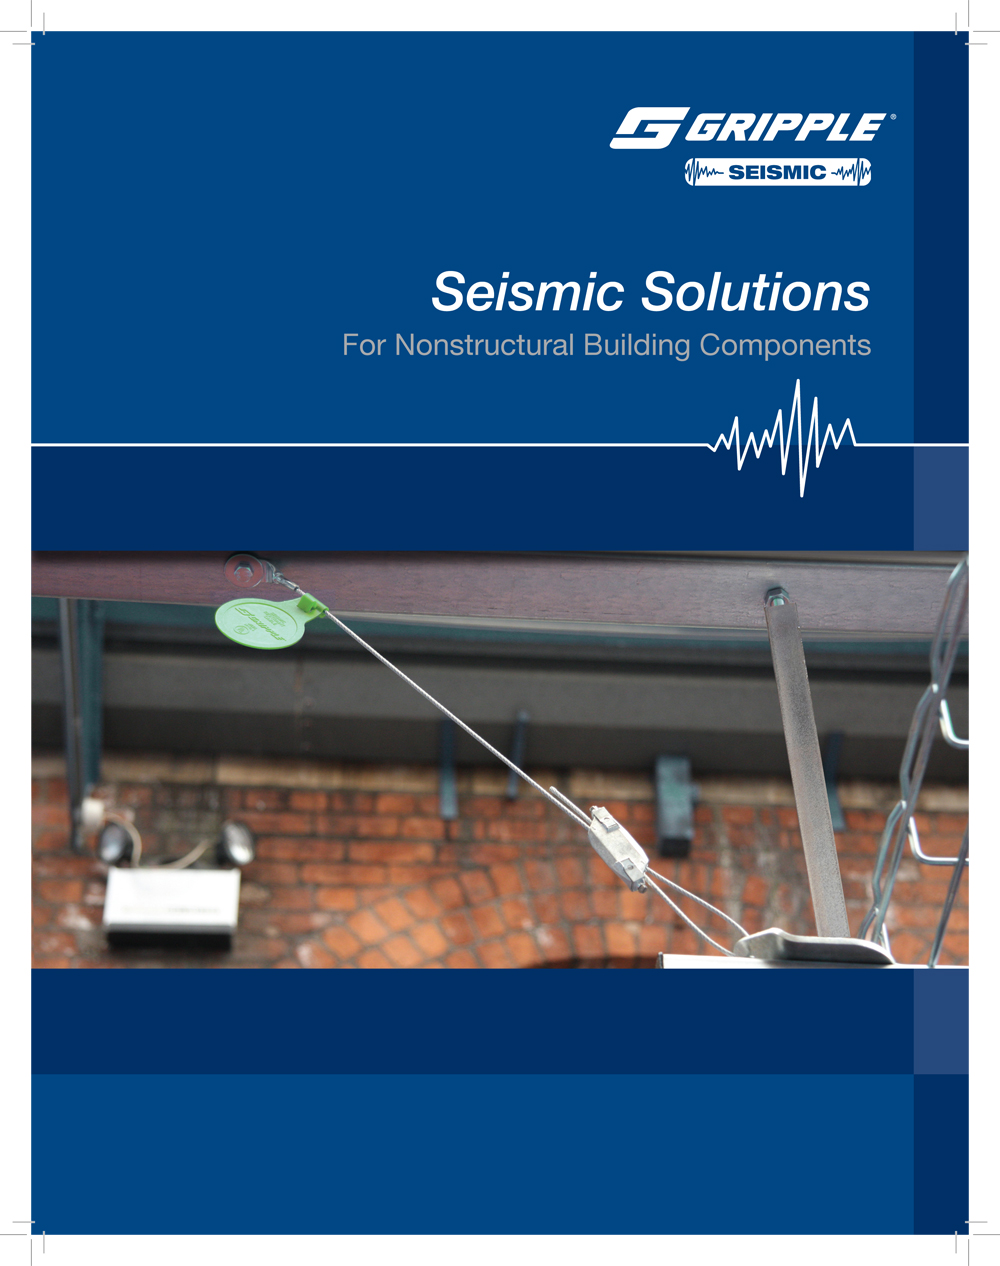 Gripple-Seismic-Solutions-1.jpg